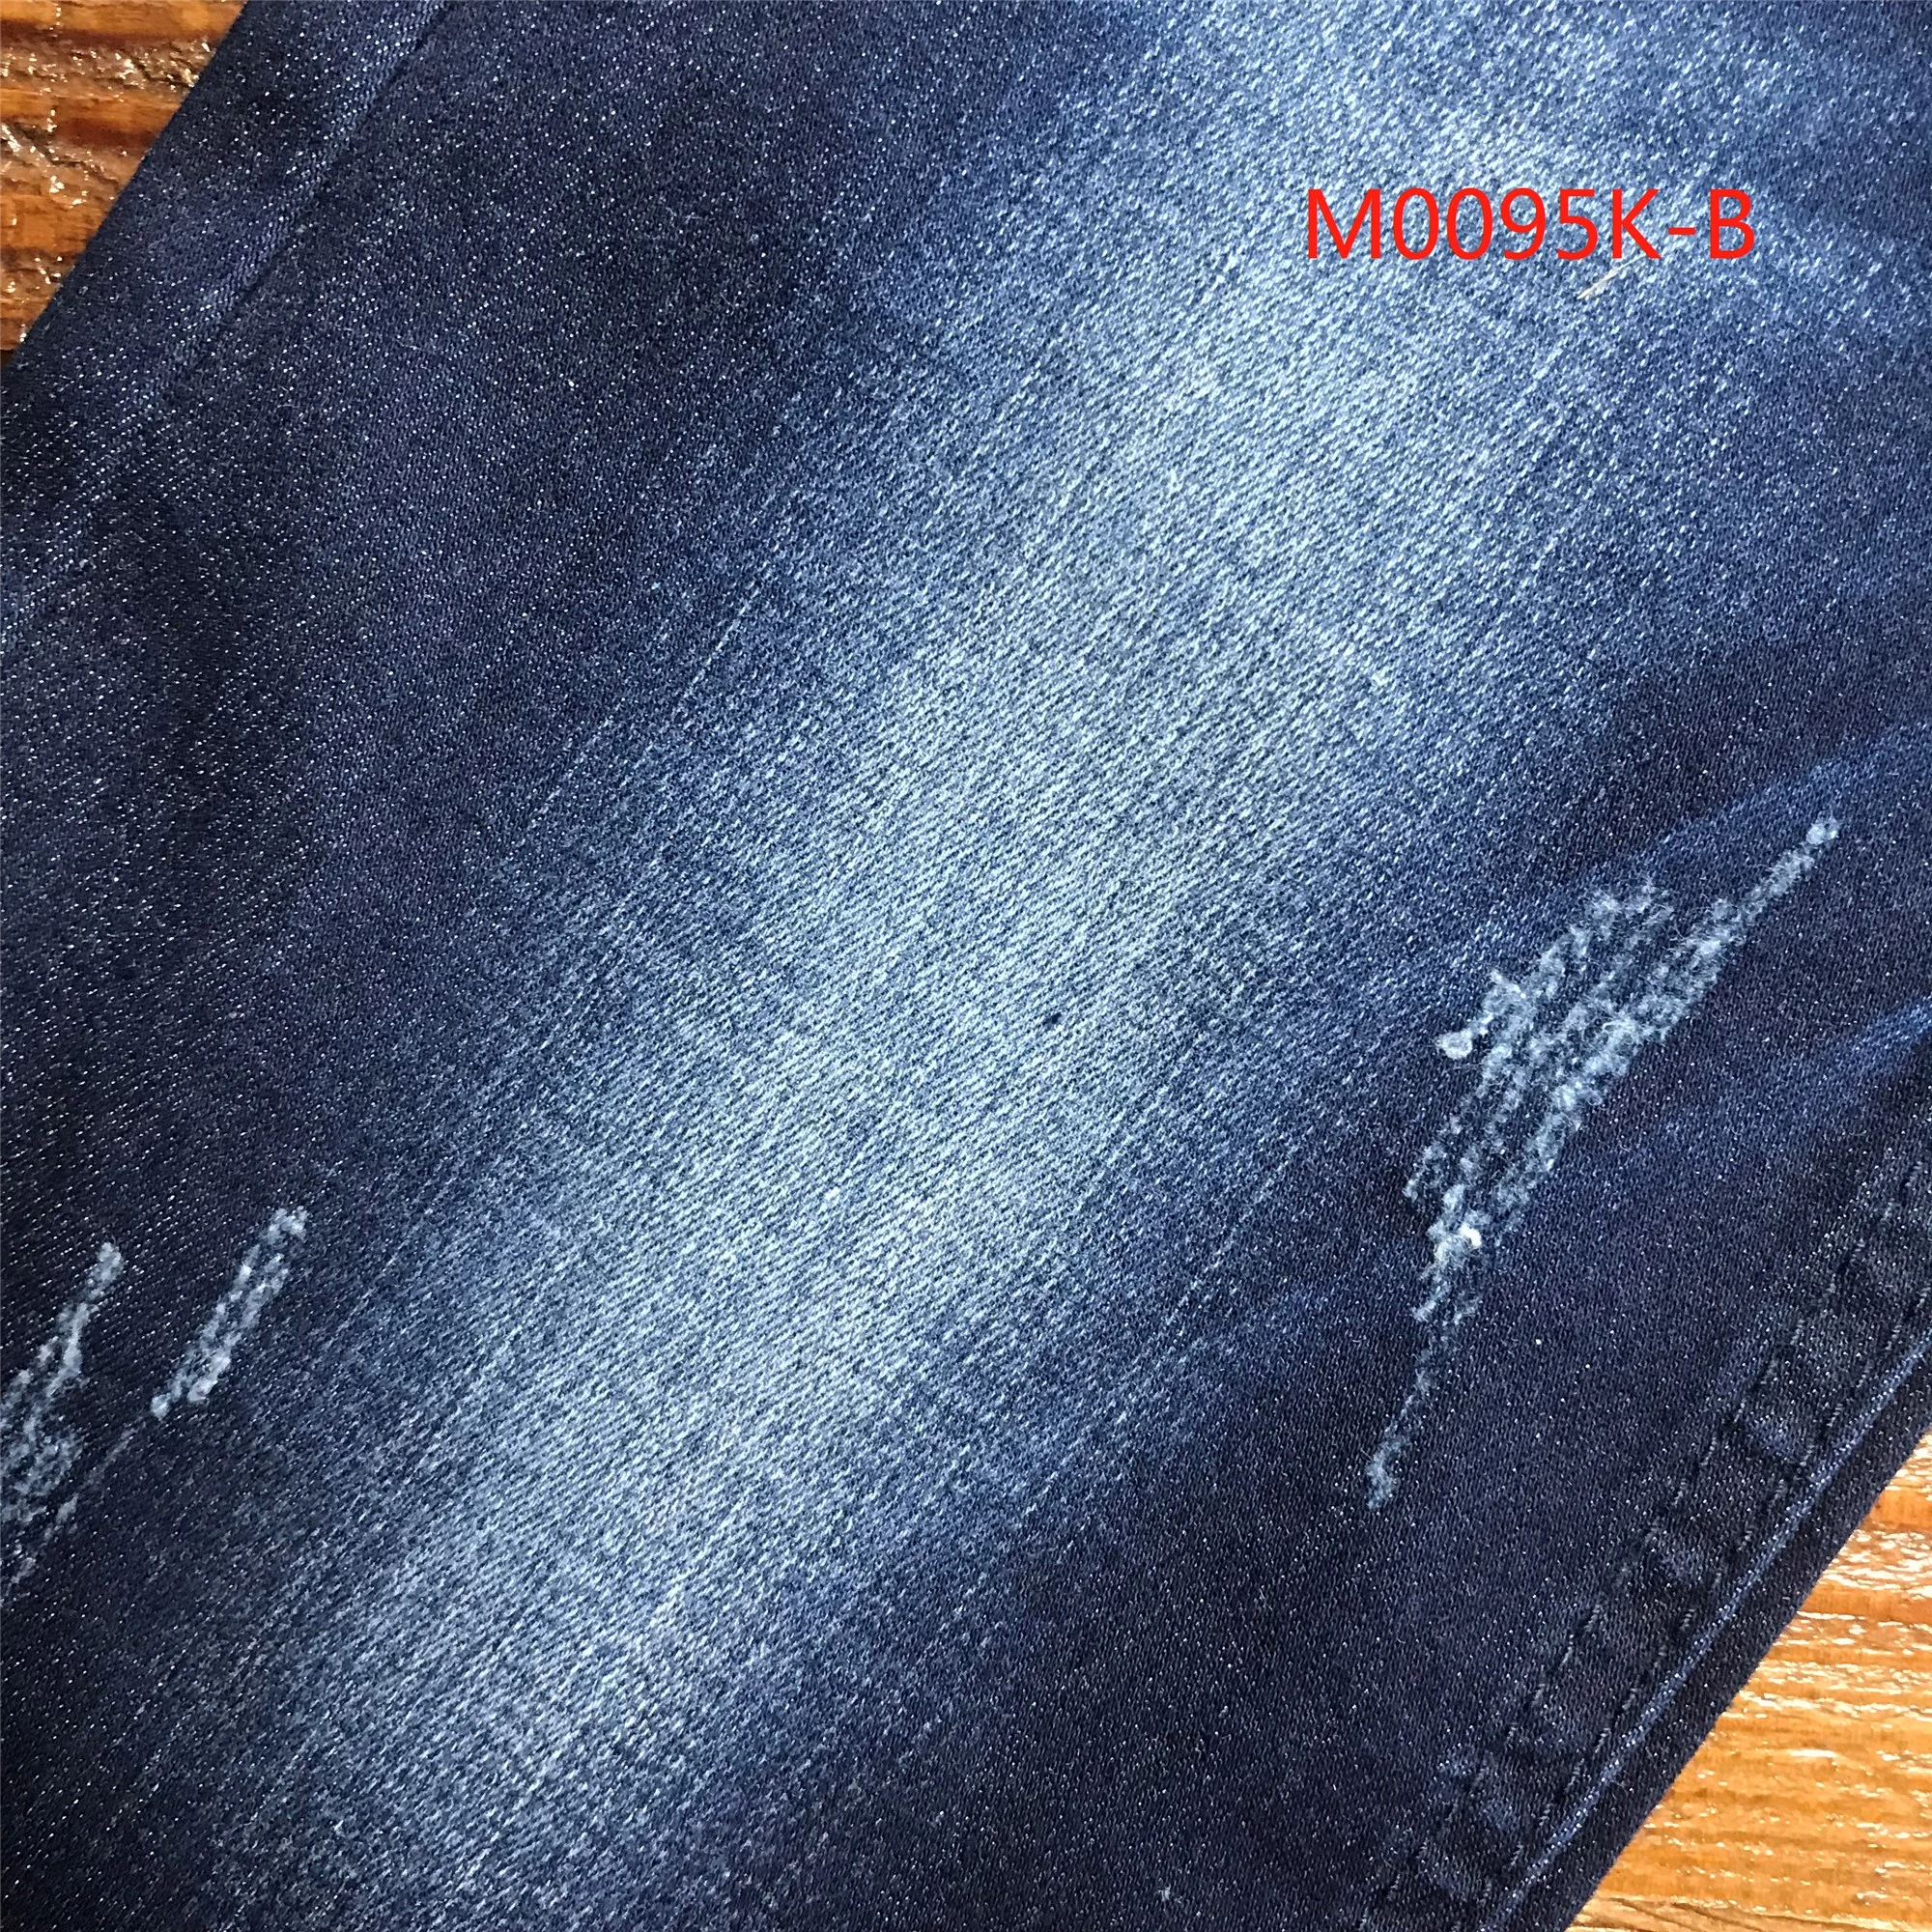 Tencel denim fabric high quality denim fabric M0095K-B